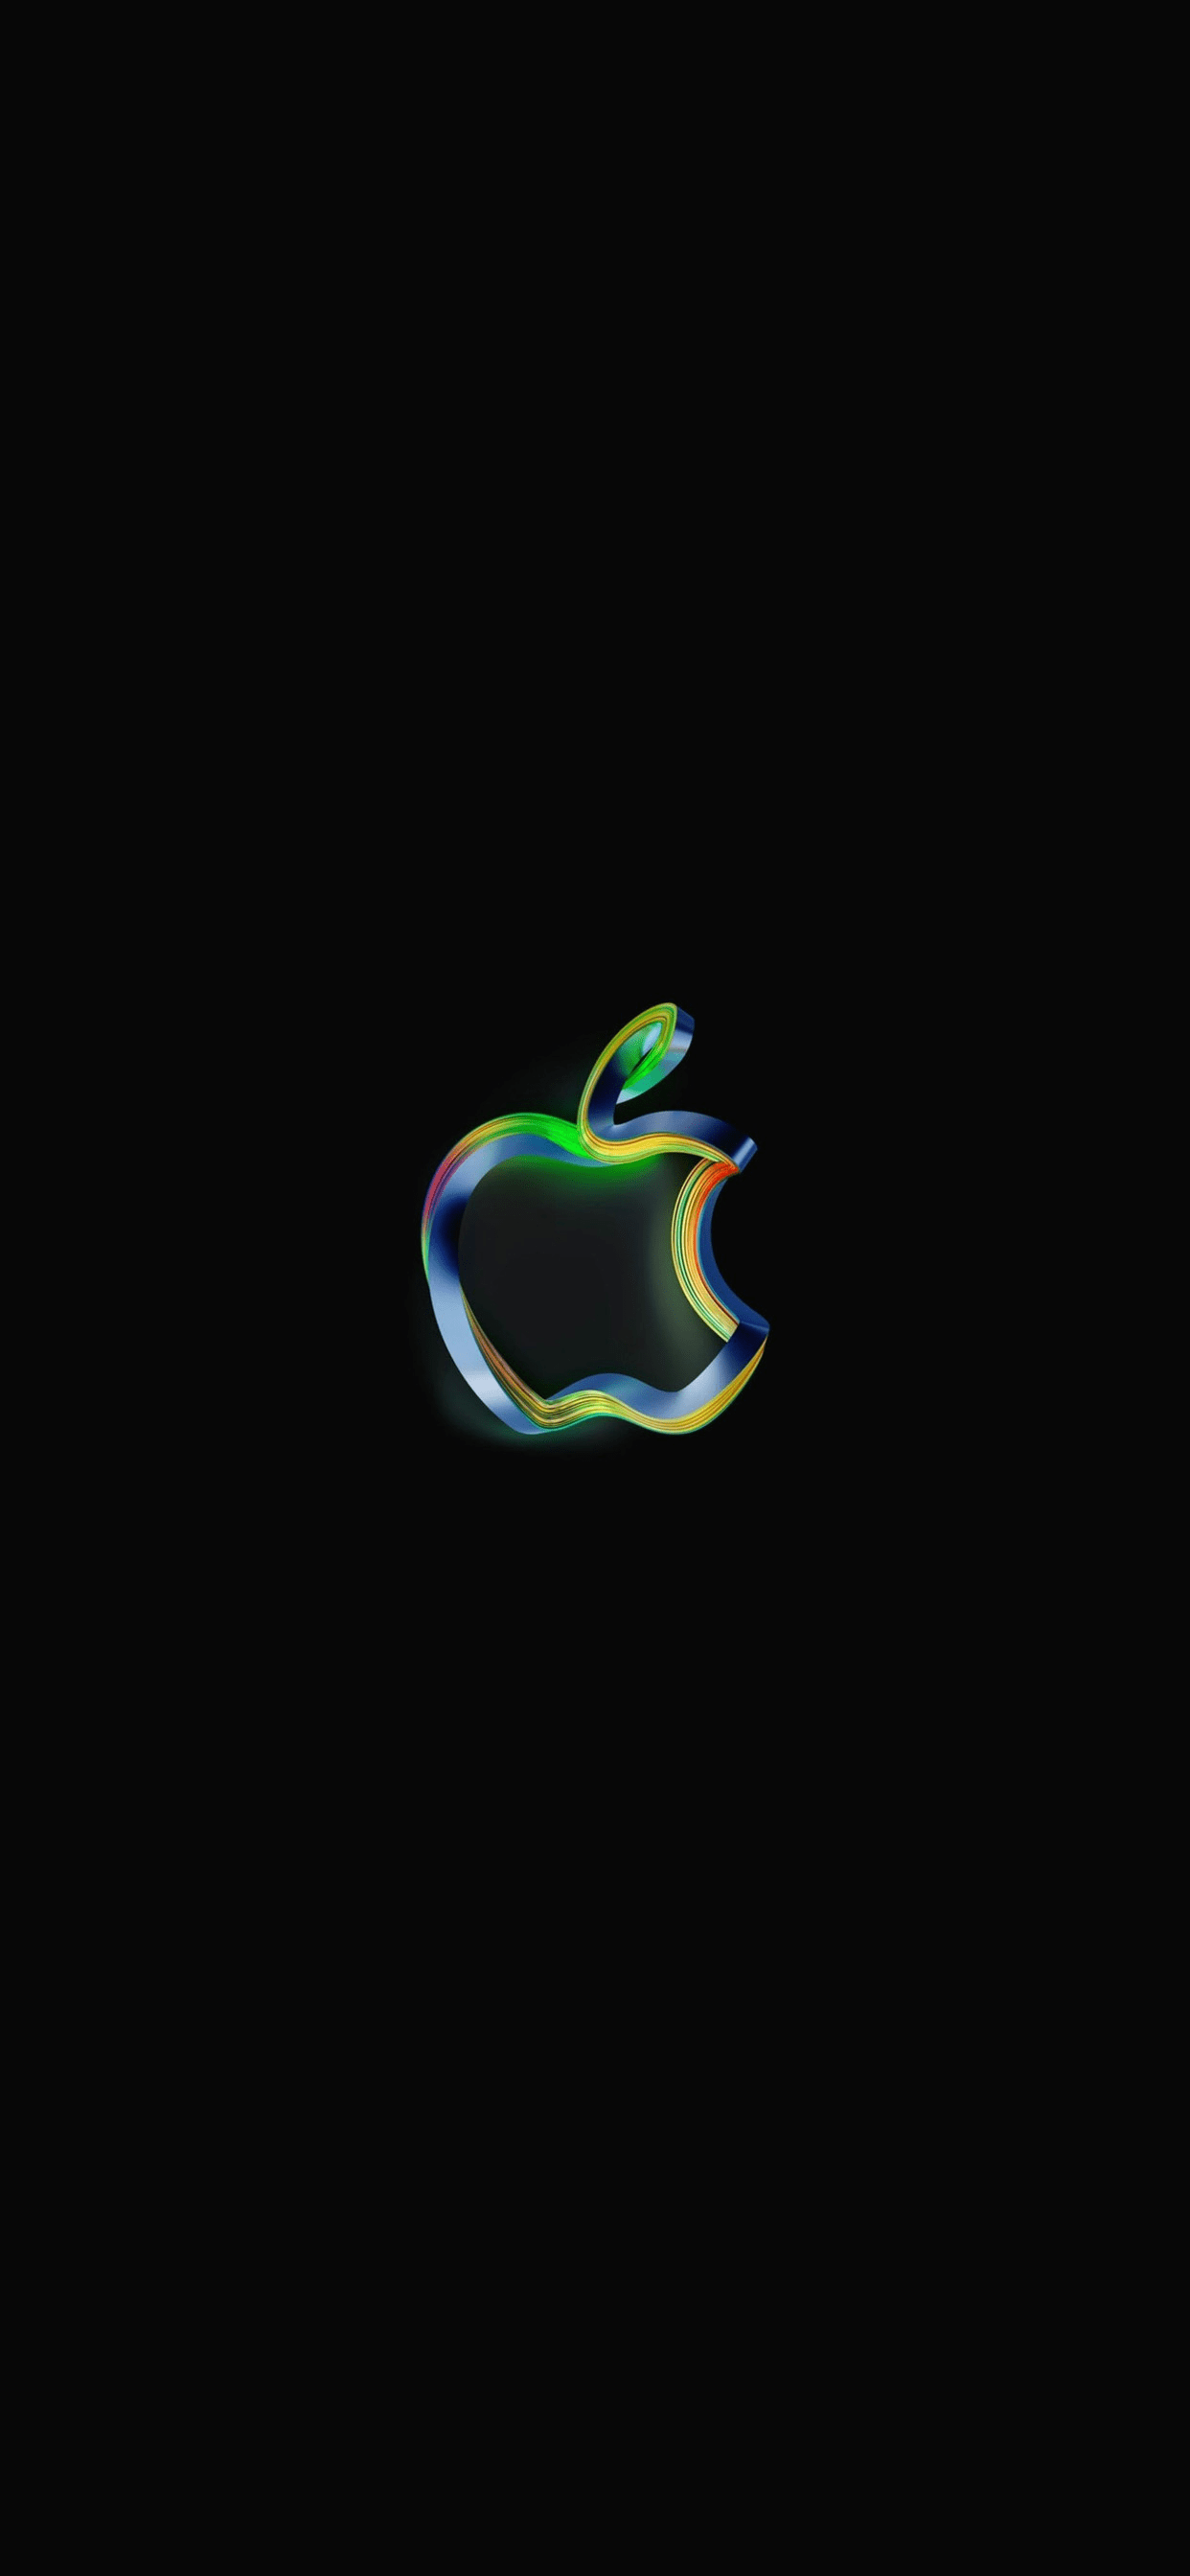 Glowing Apple iPhone 7 Wallpaper 750x1334